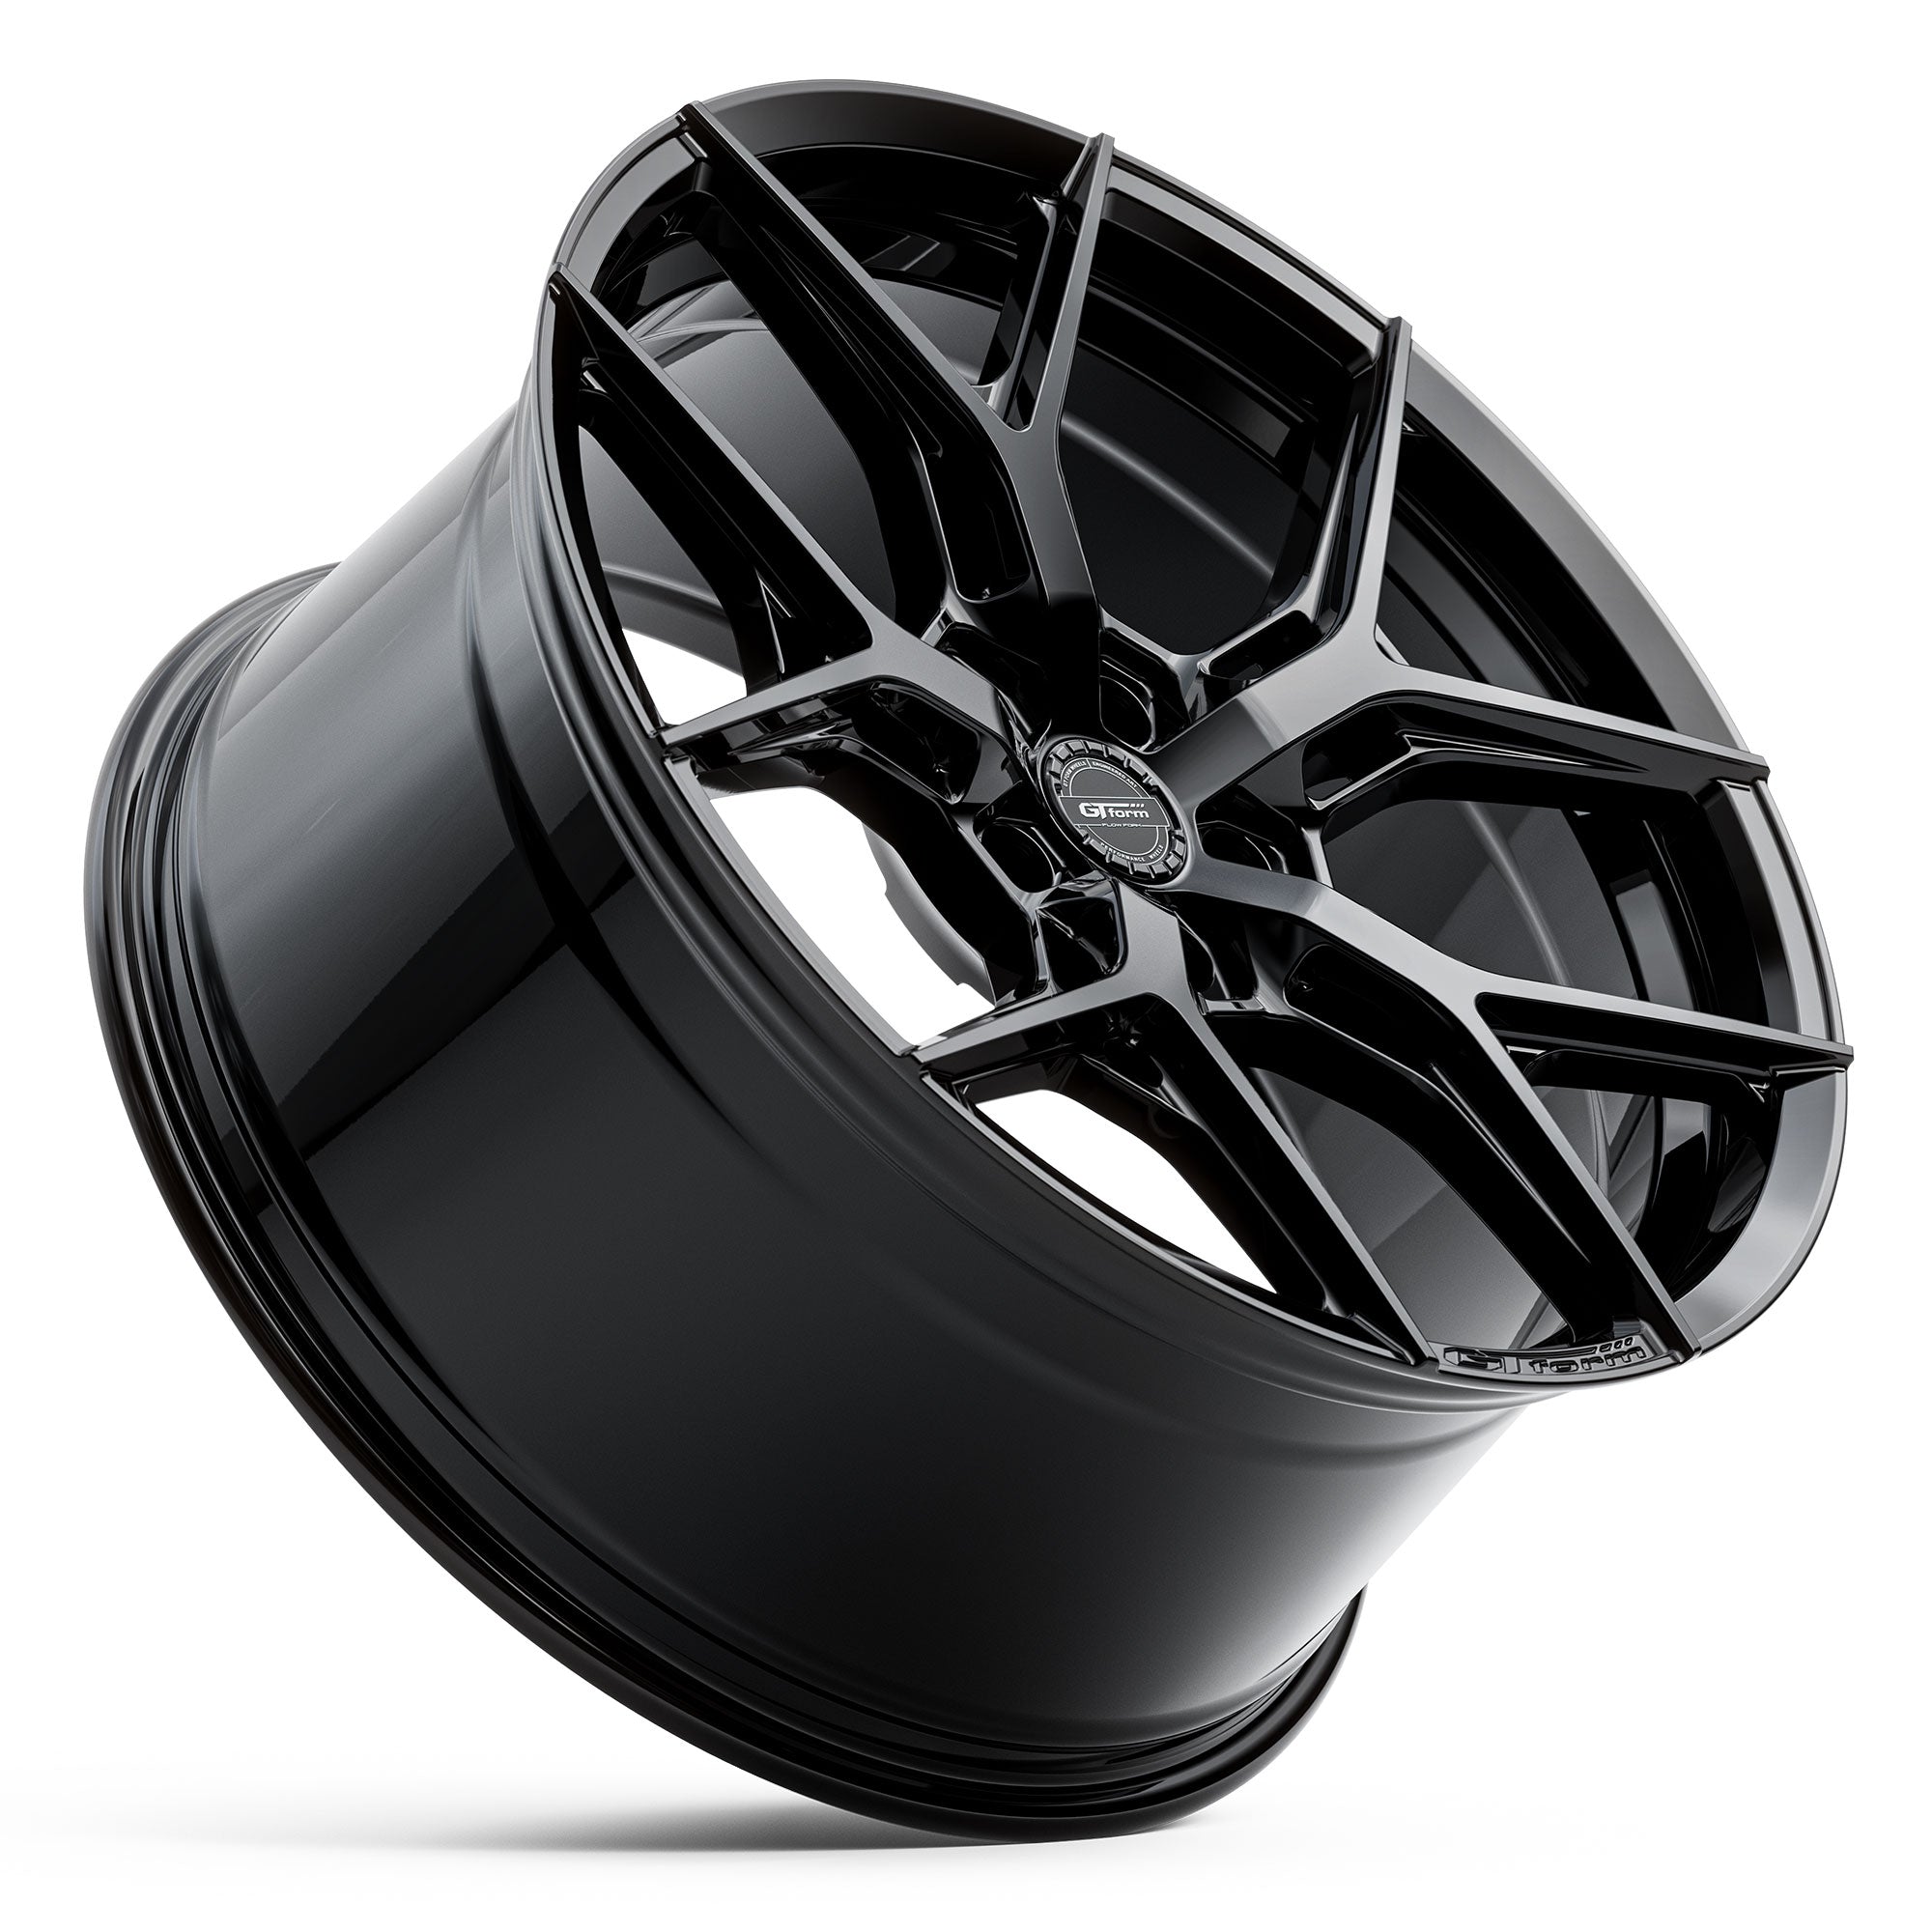 GT Form Wheels Torque Gloss Black - MODE Auto Concepts